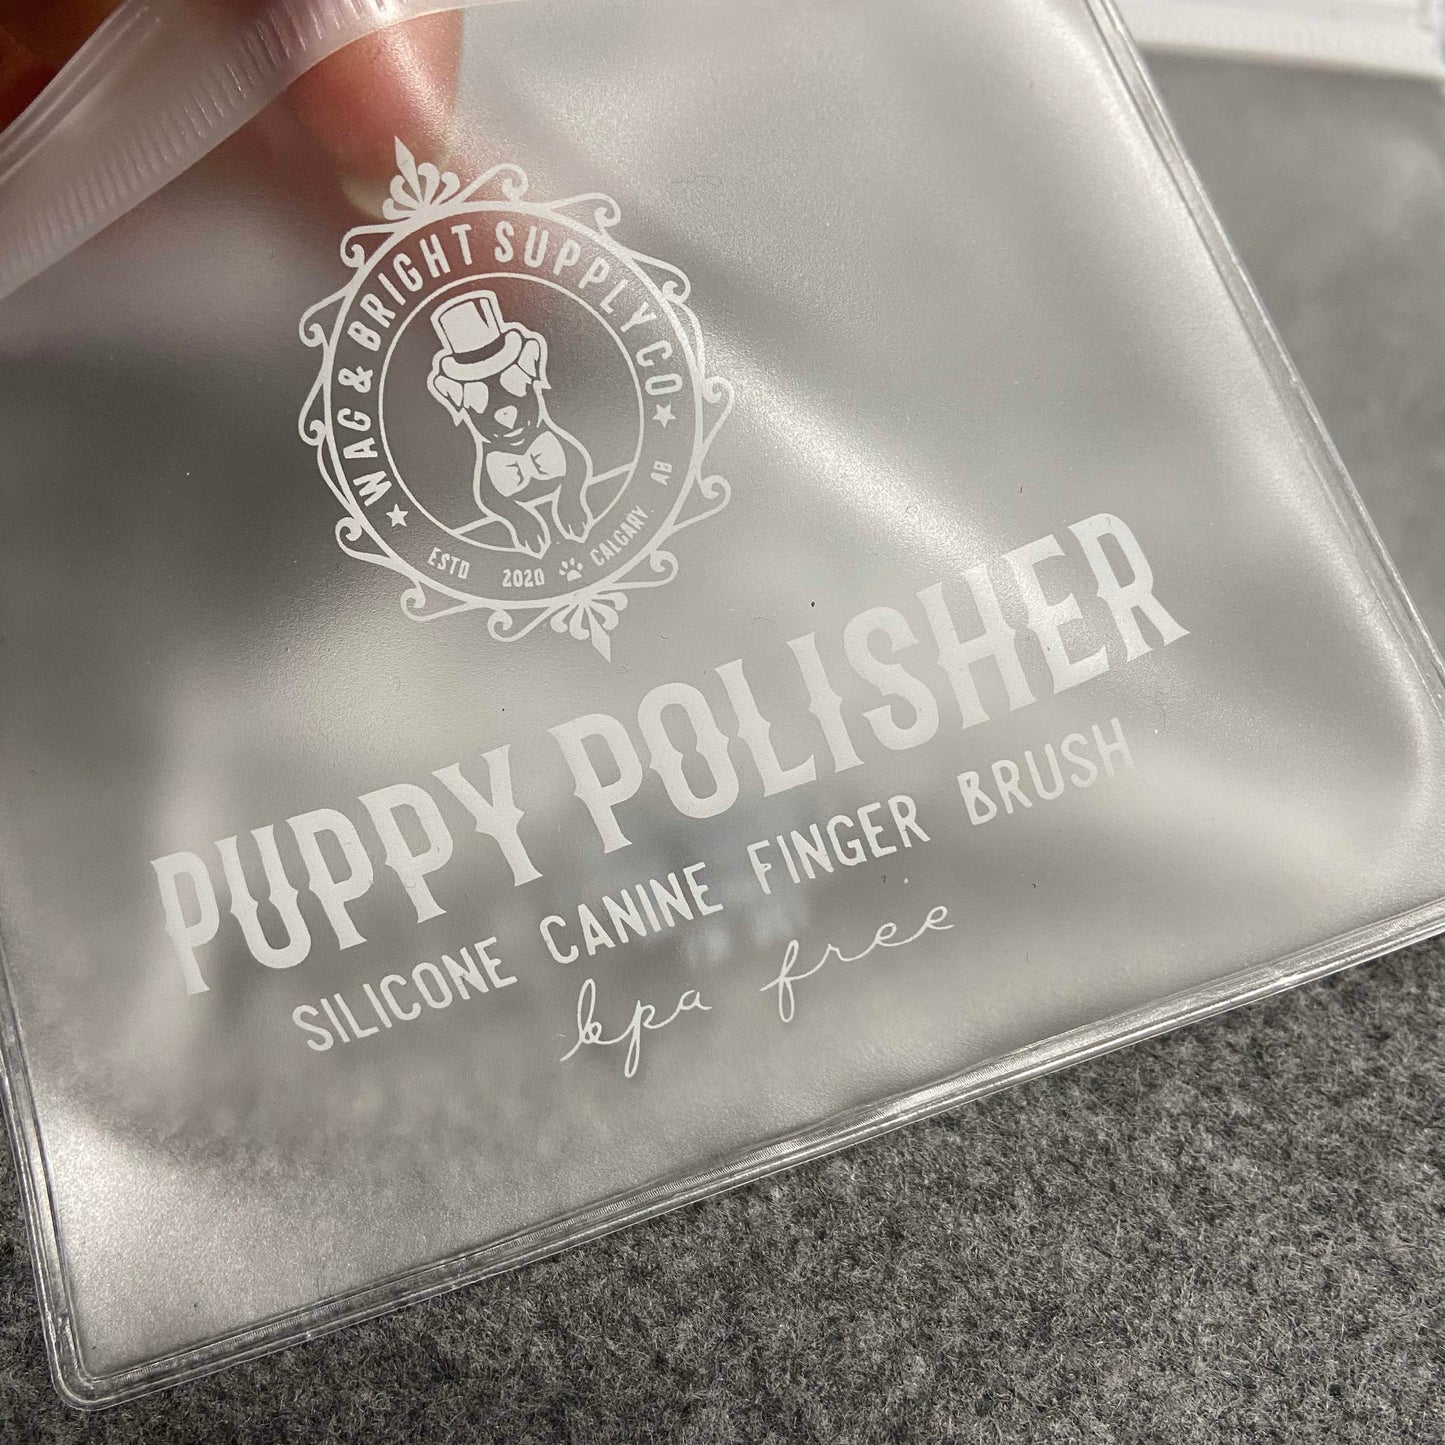 Puppy Polisher Silicone BPA Free Finger Brush